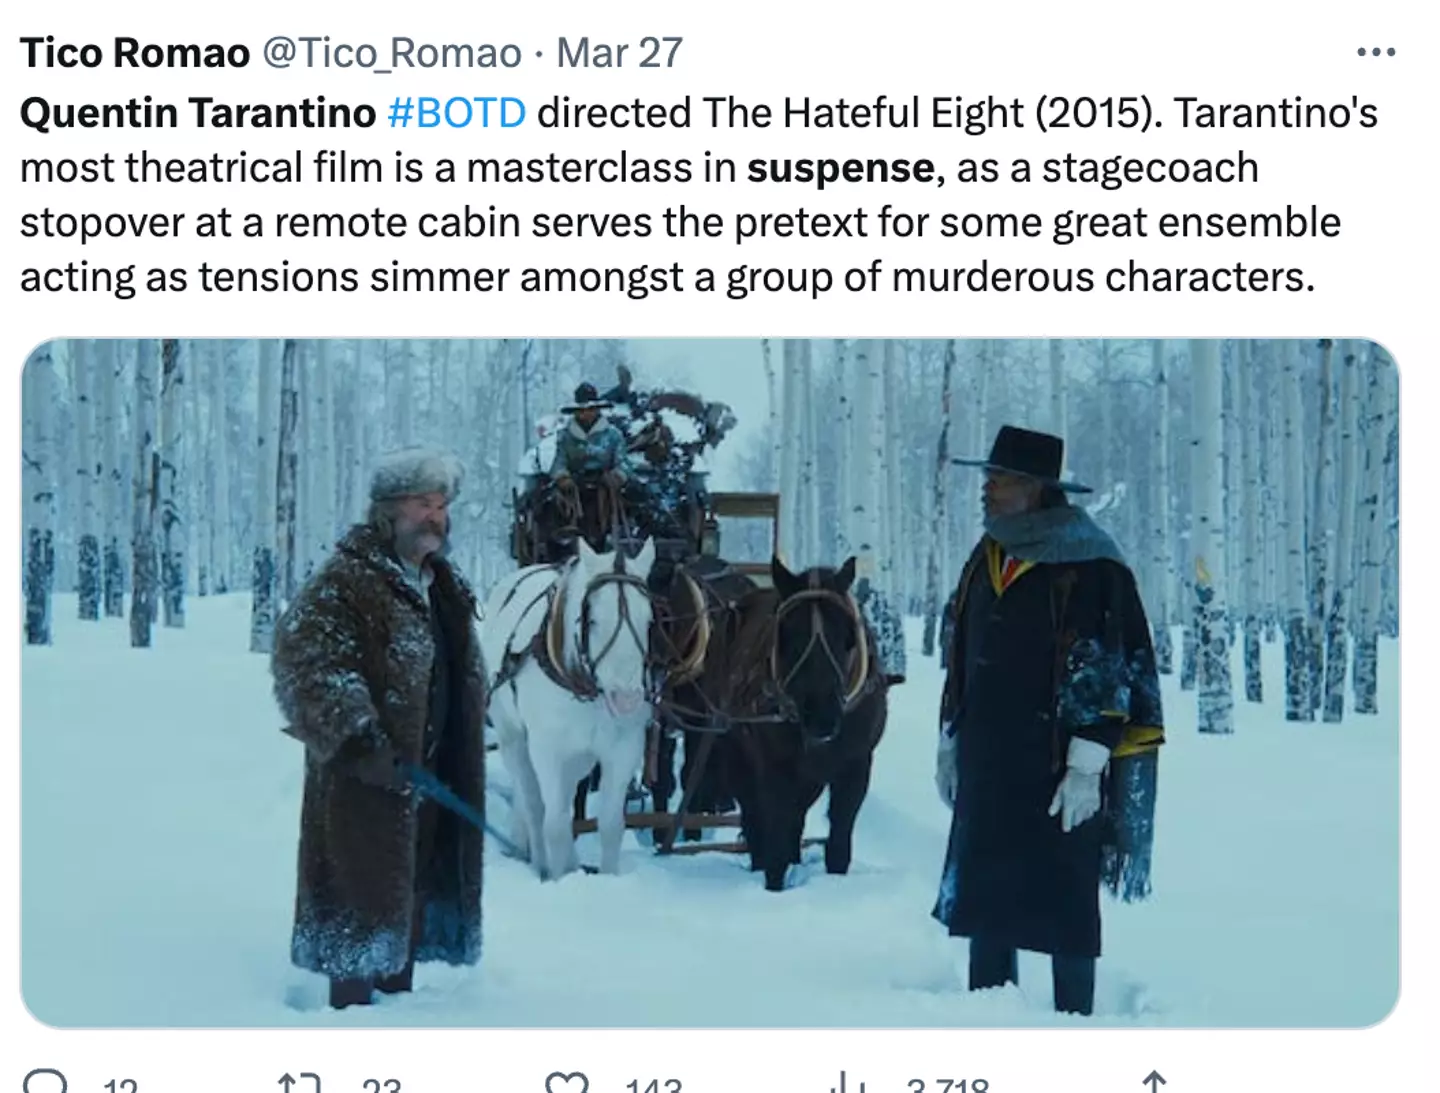 Fans have praised Tarantino's talents at creating suspense.